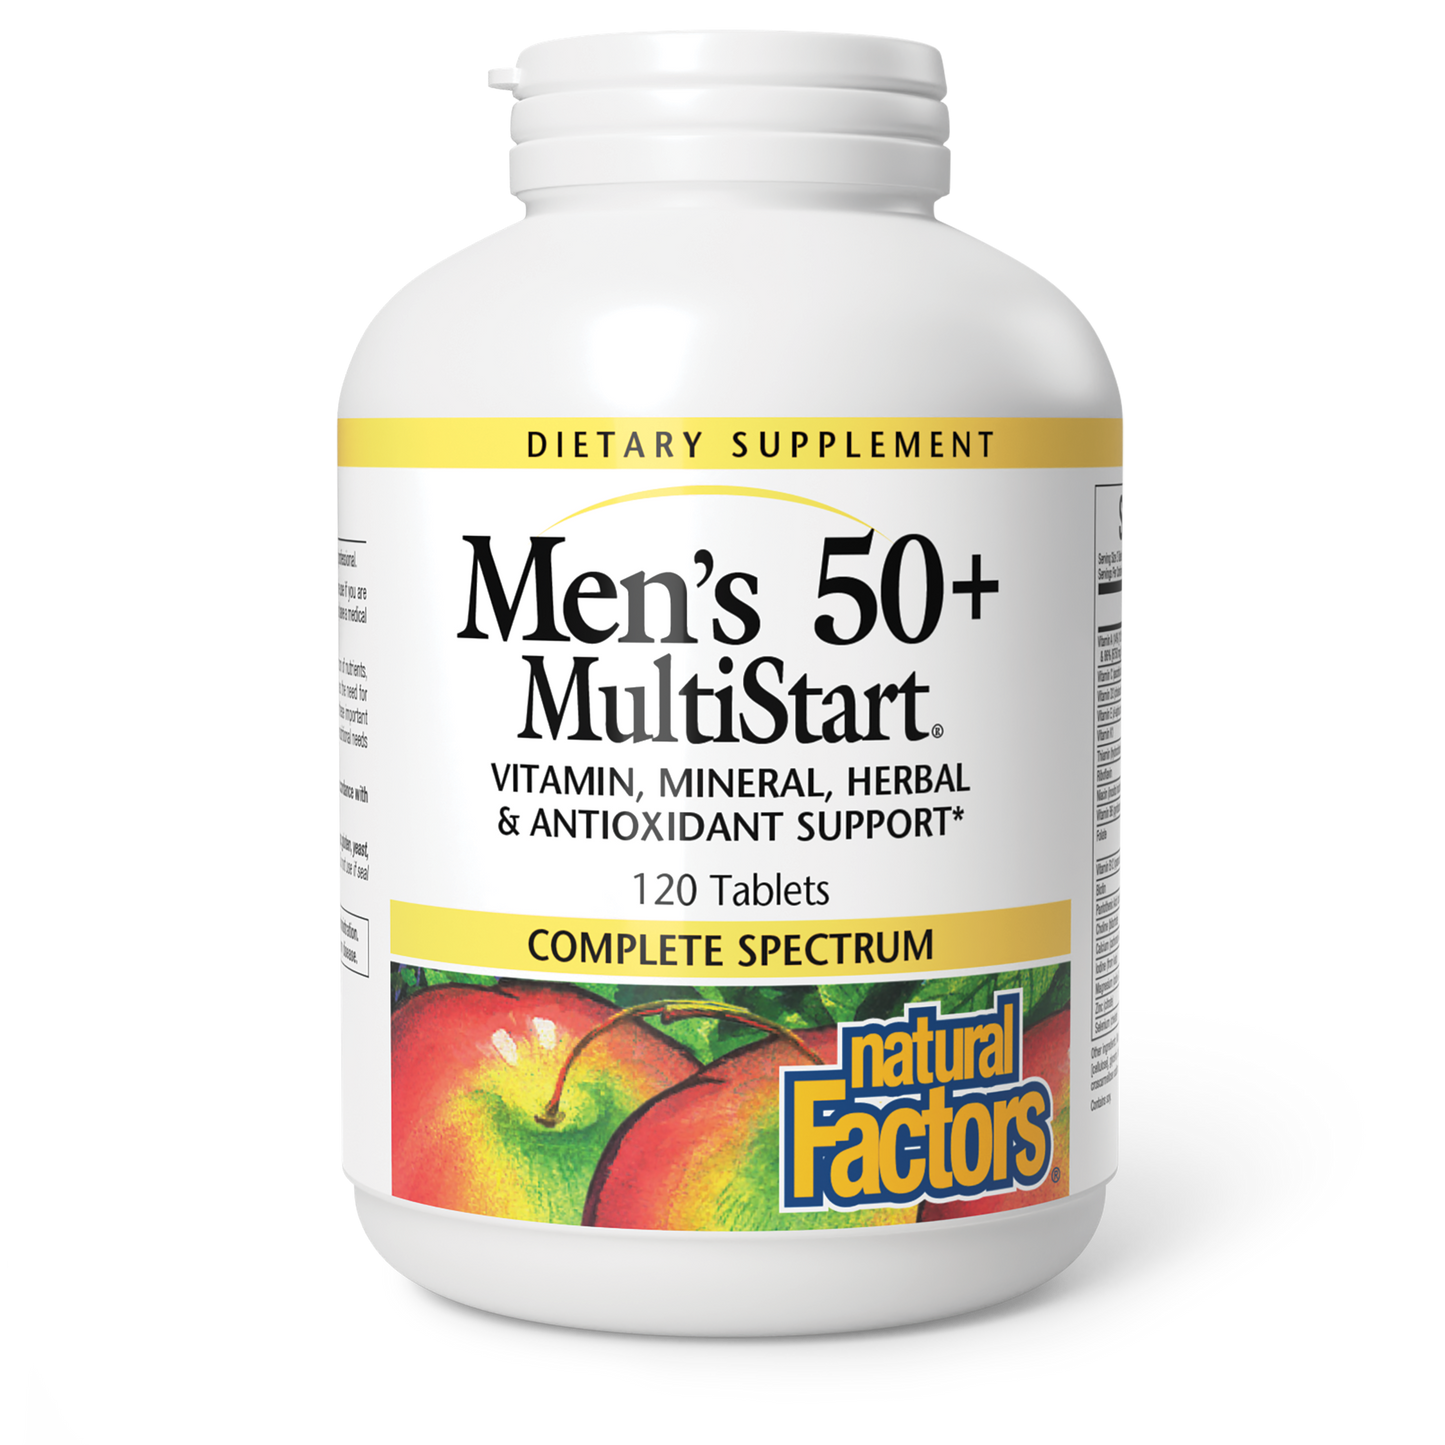 MultiStart® Men's 50+|variant|hi-res|1573U